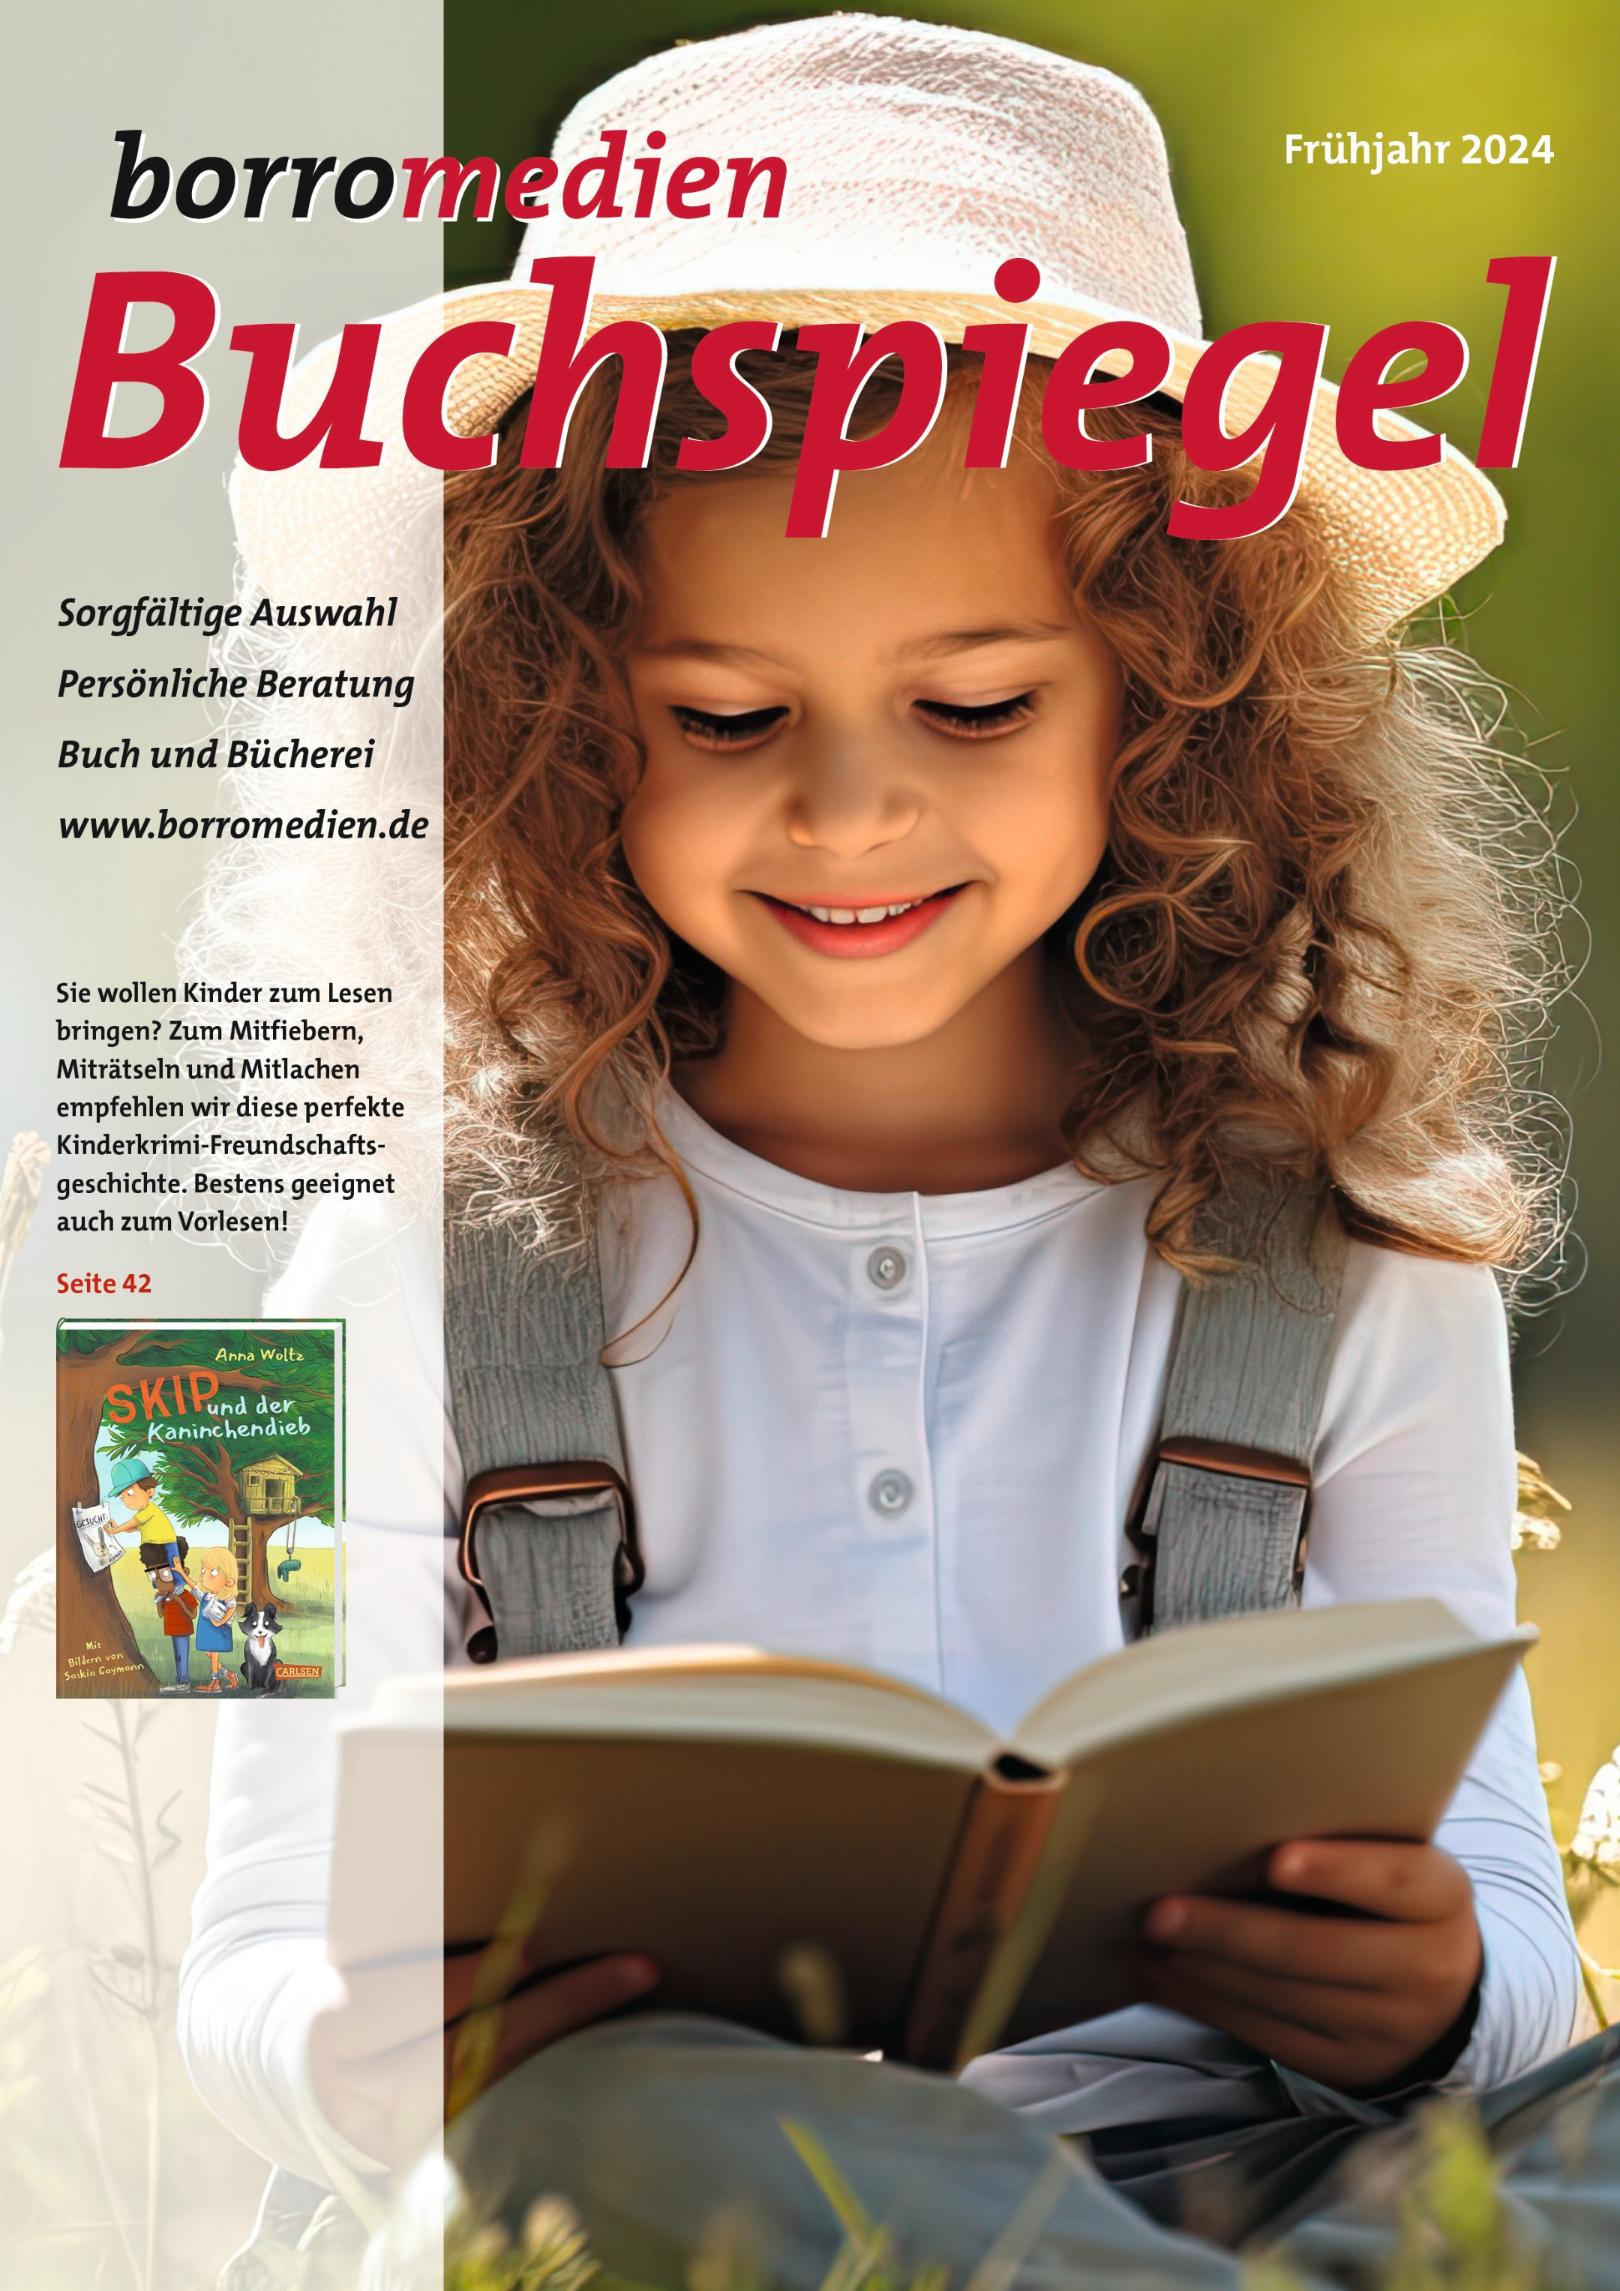 Buchspiegel Frühjahr 2024 (c) borromedien.de